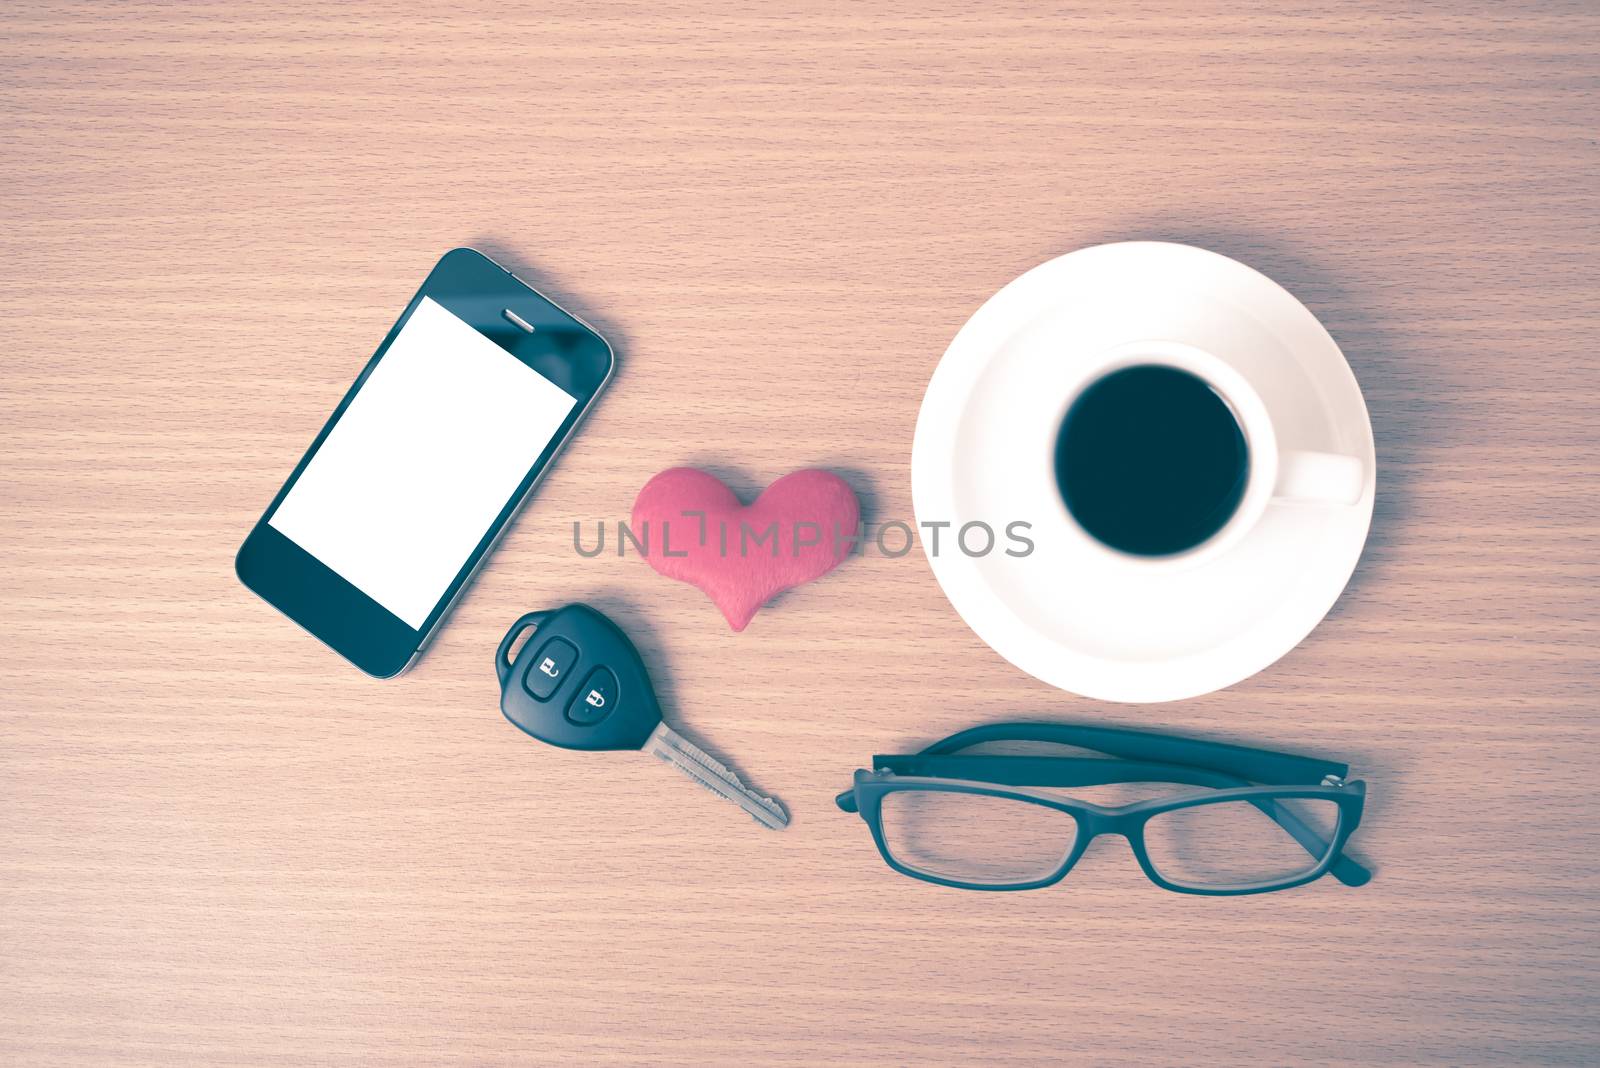 coffee,phone,eyeglasses and car key on wood table background vintage style